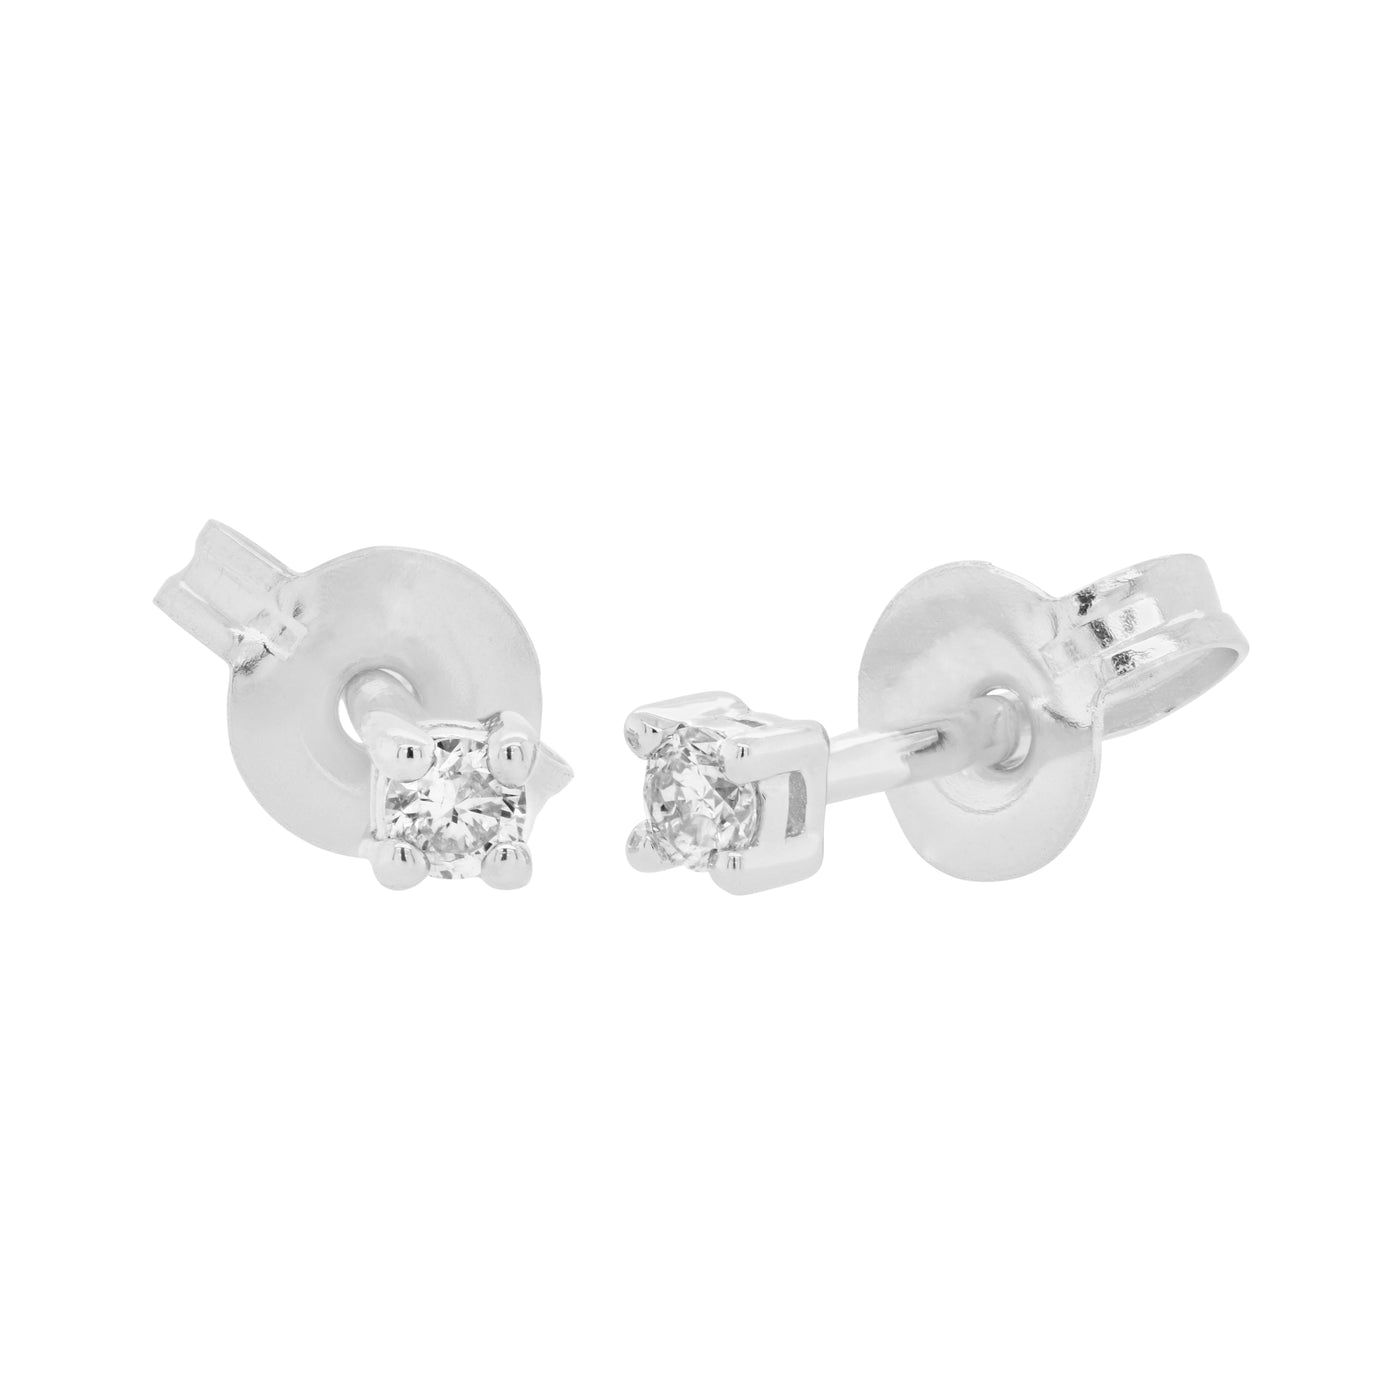 9ct White Gold Diamond Stud Earrings - 0.06 Carats